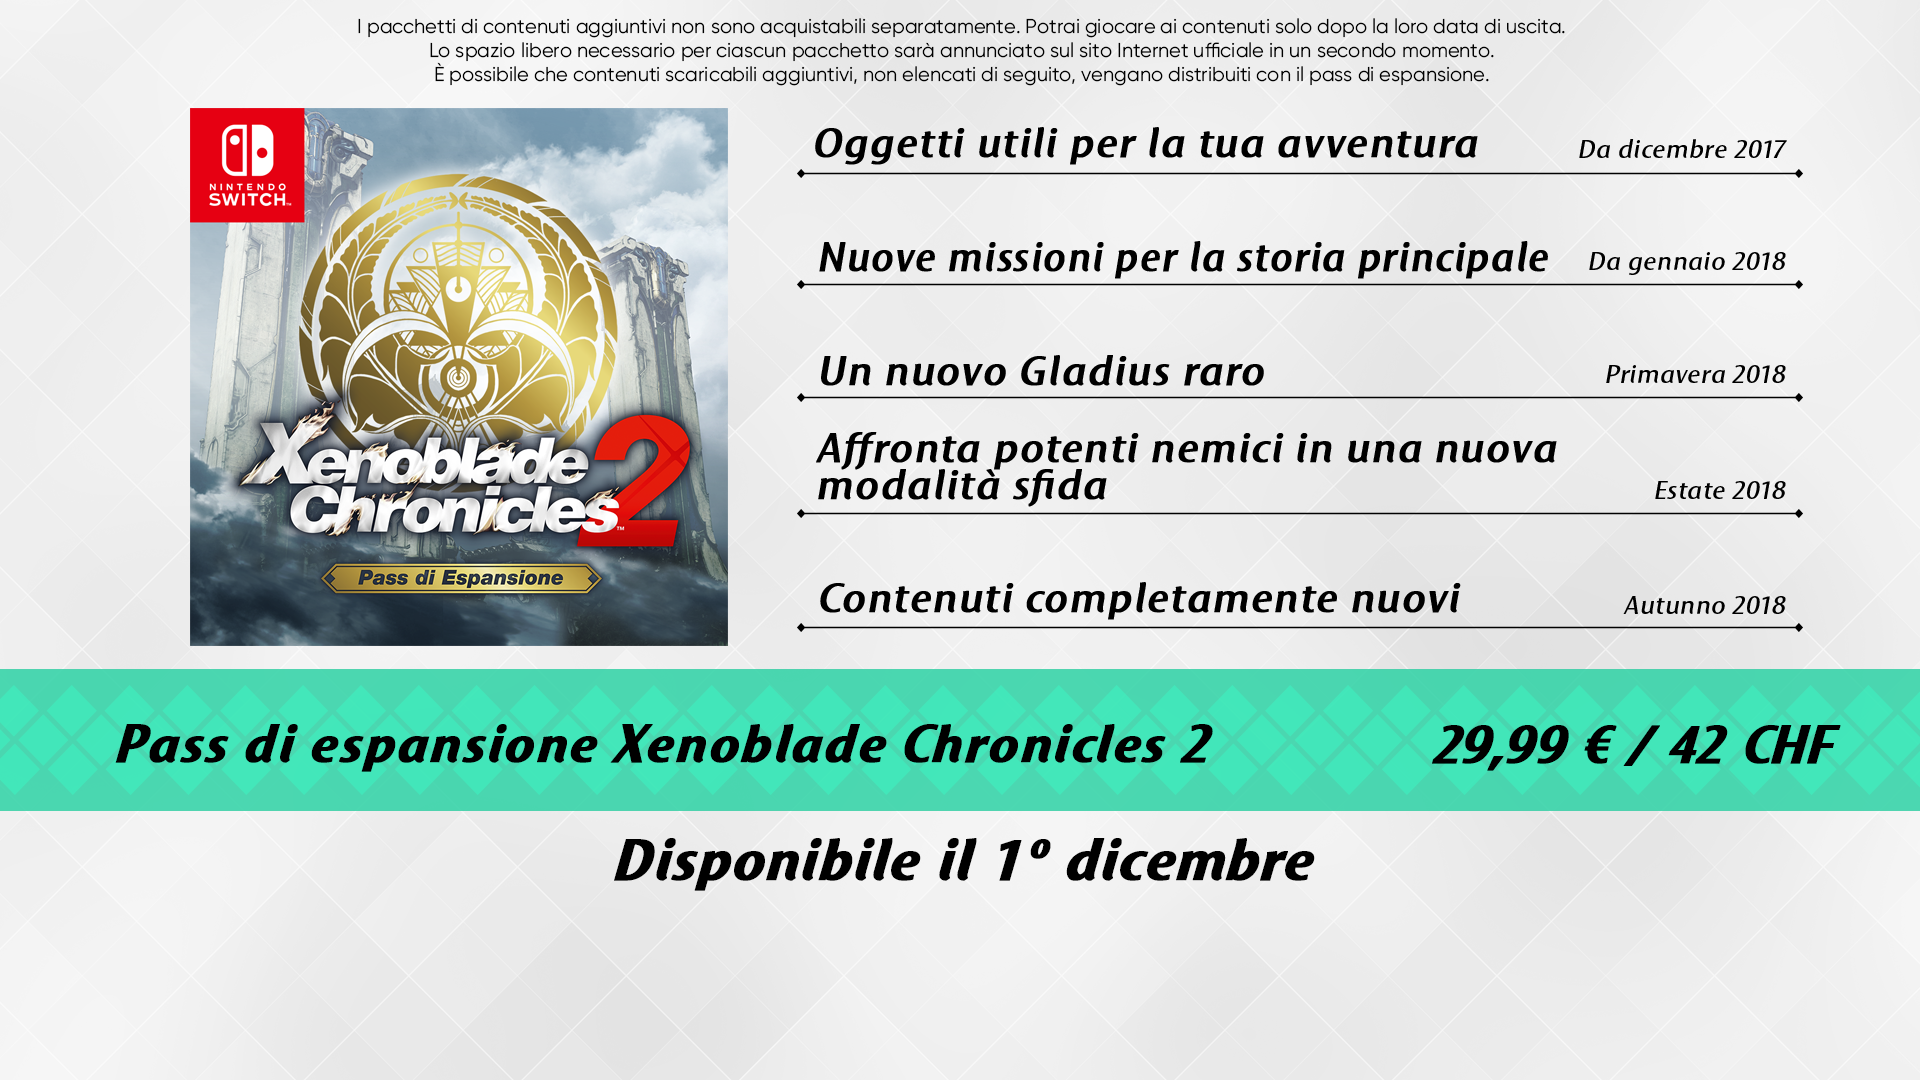 Xenoblade Chronicles 2 Pass di Espansione